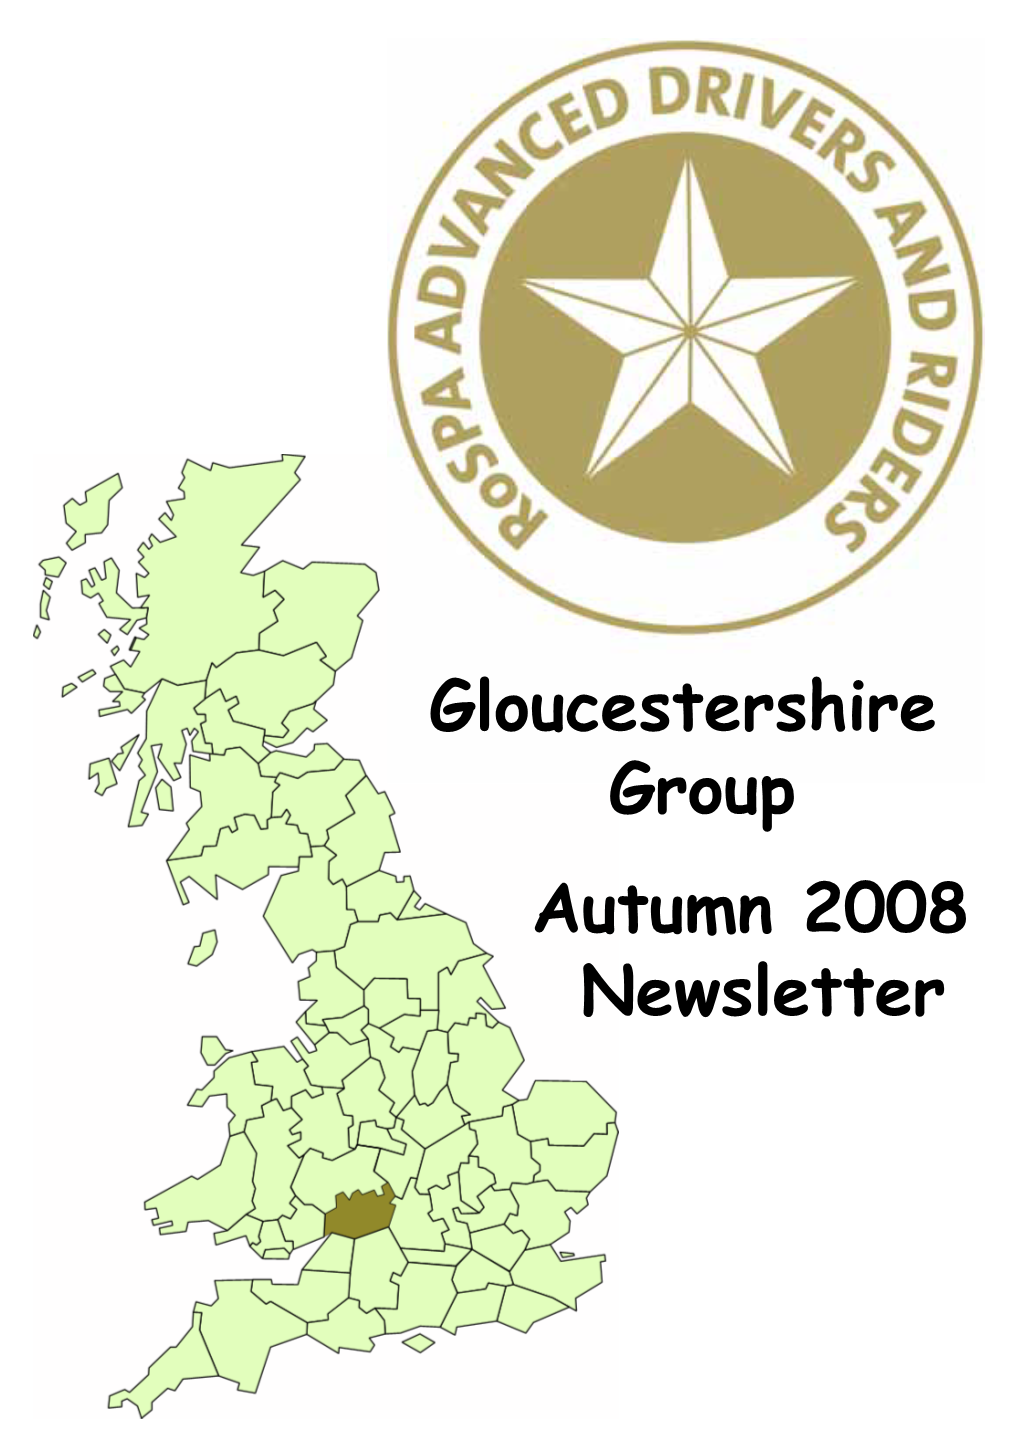 Gloucestershire Group Autumn 2008 Newsletter Future Events Roundup